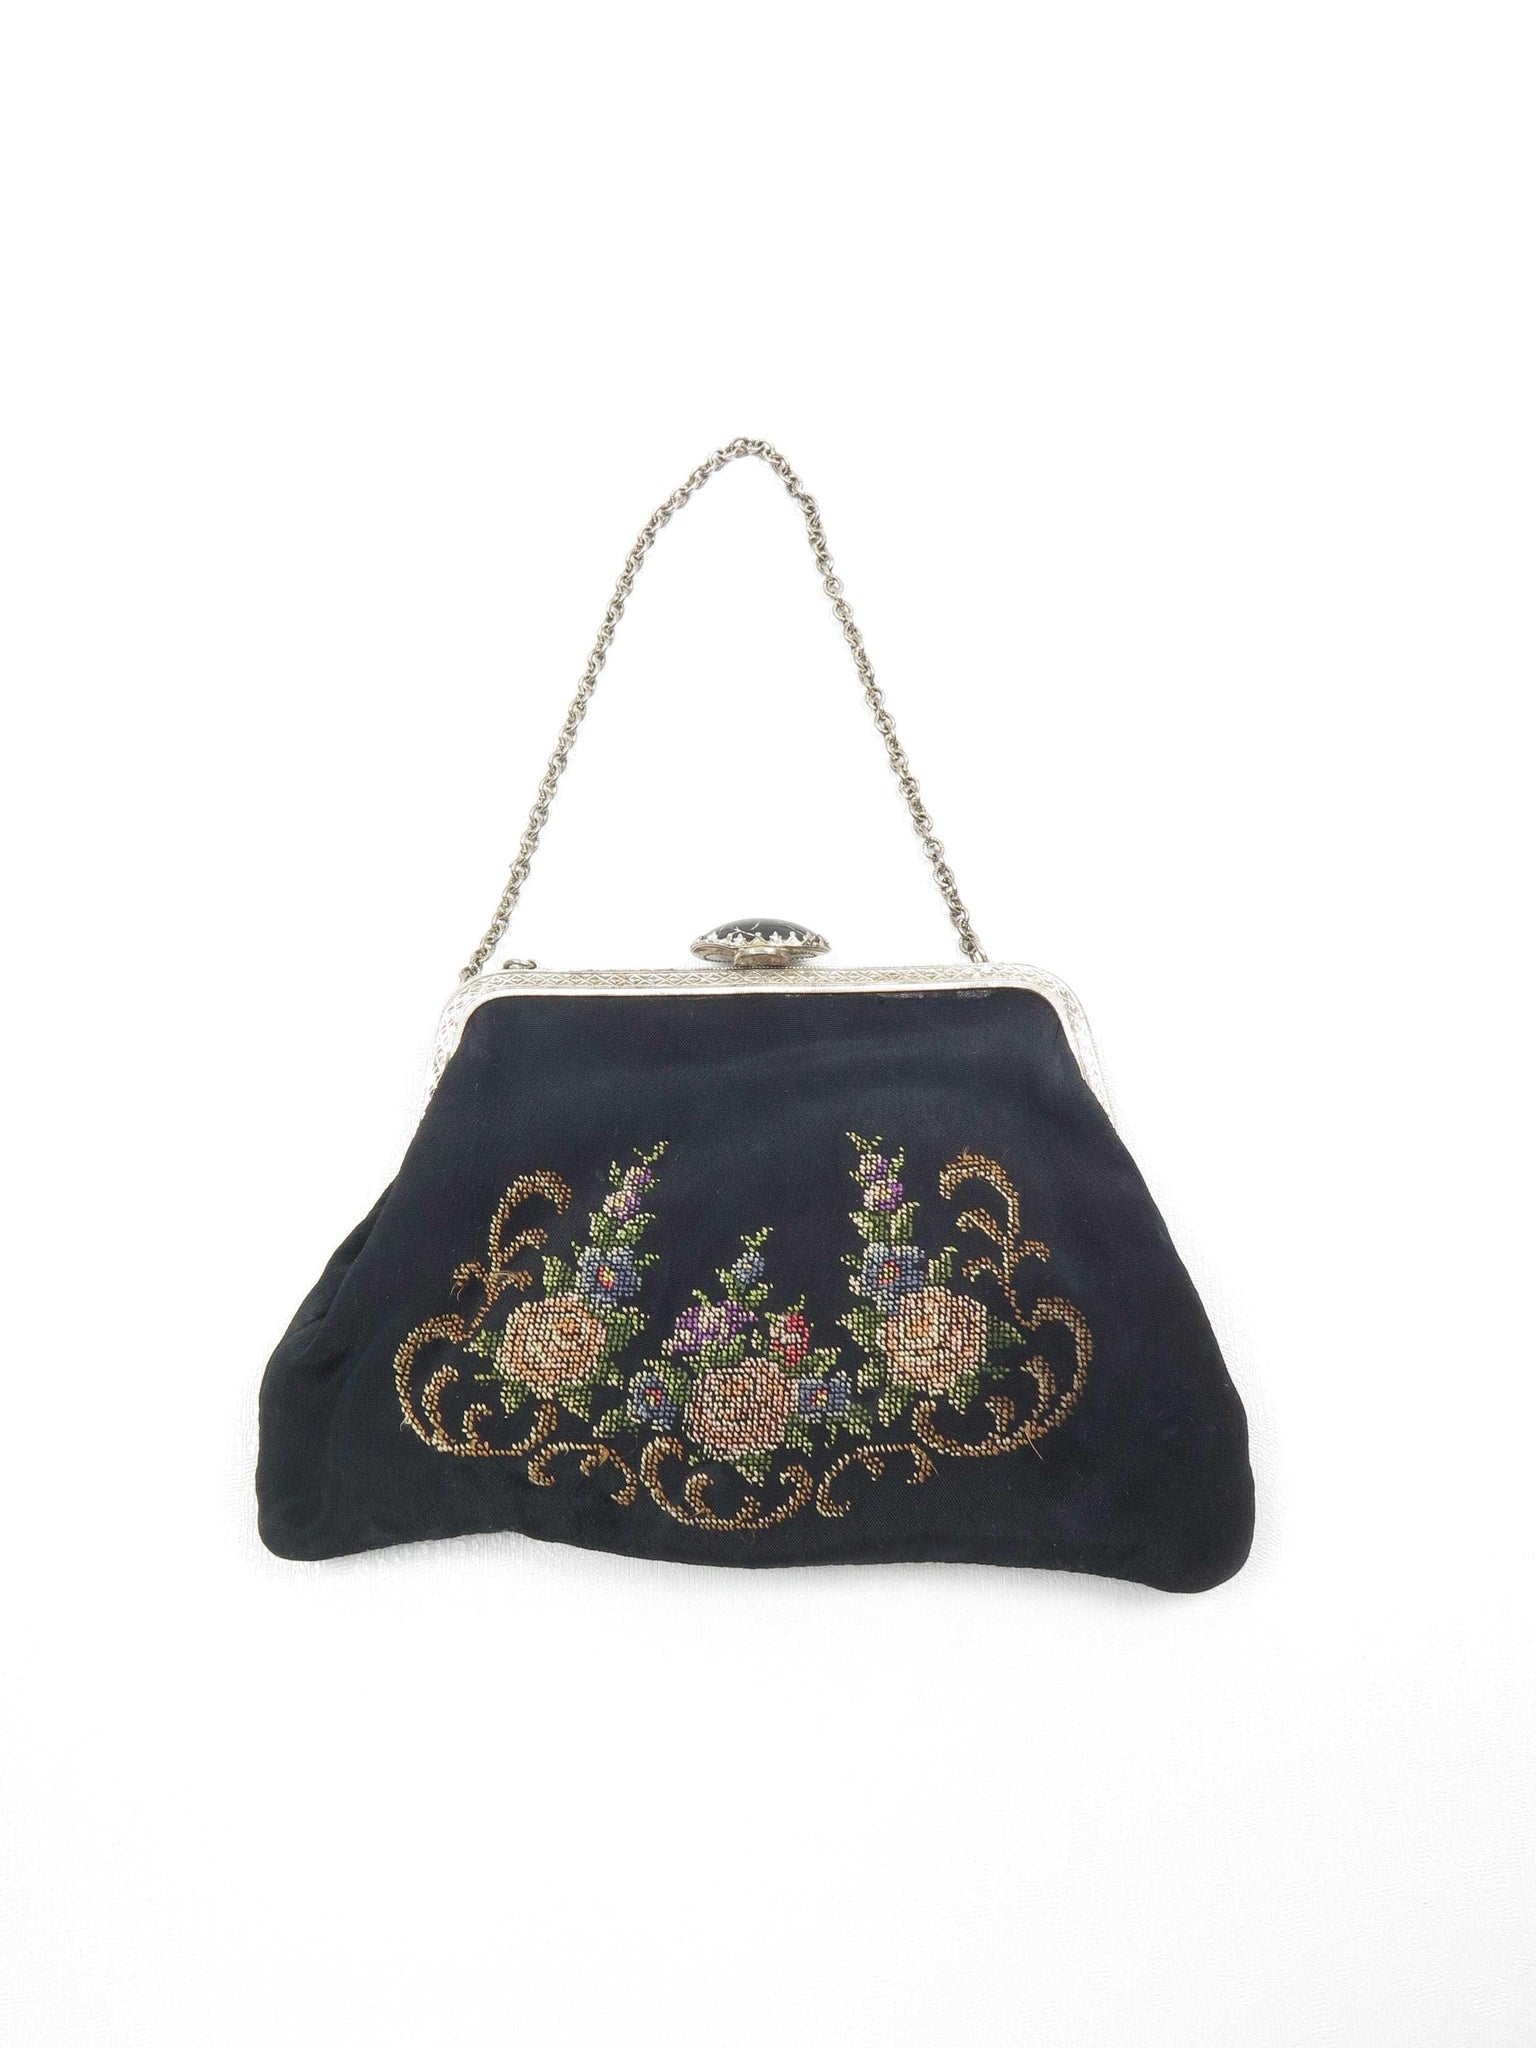 1940s Vintage Bag Petit Point Hand Embroidered Black - The Harlequin